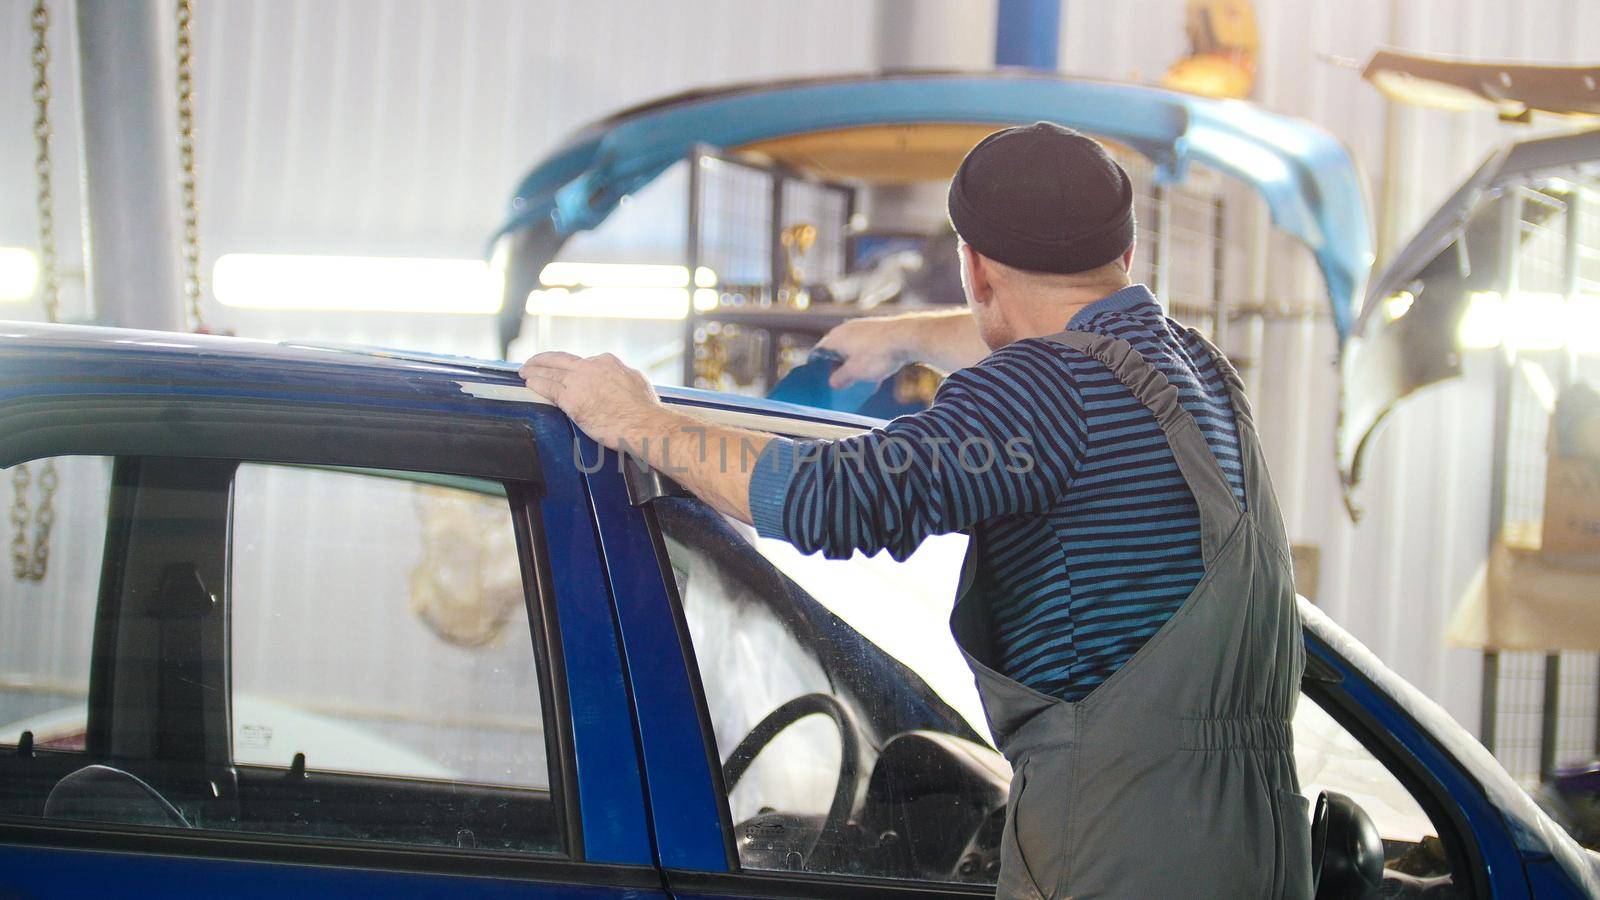 Professional car service - a worker polishes a blue automobile, telephoto